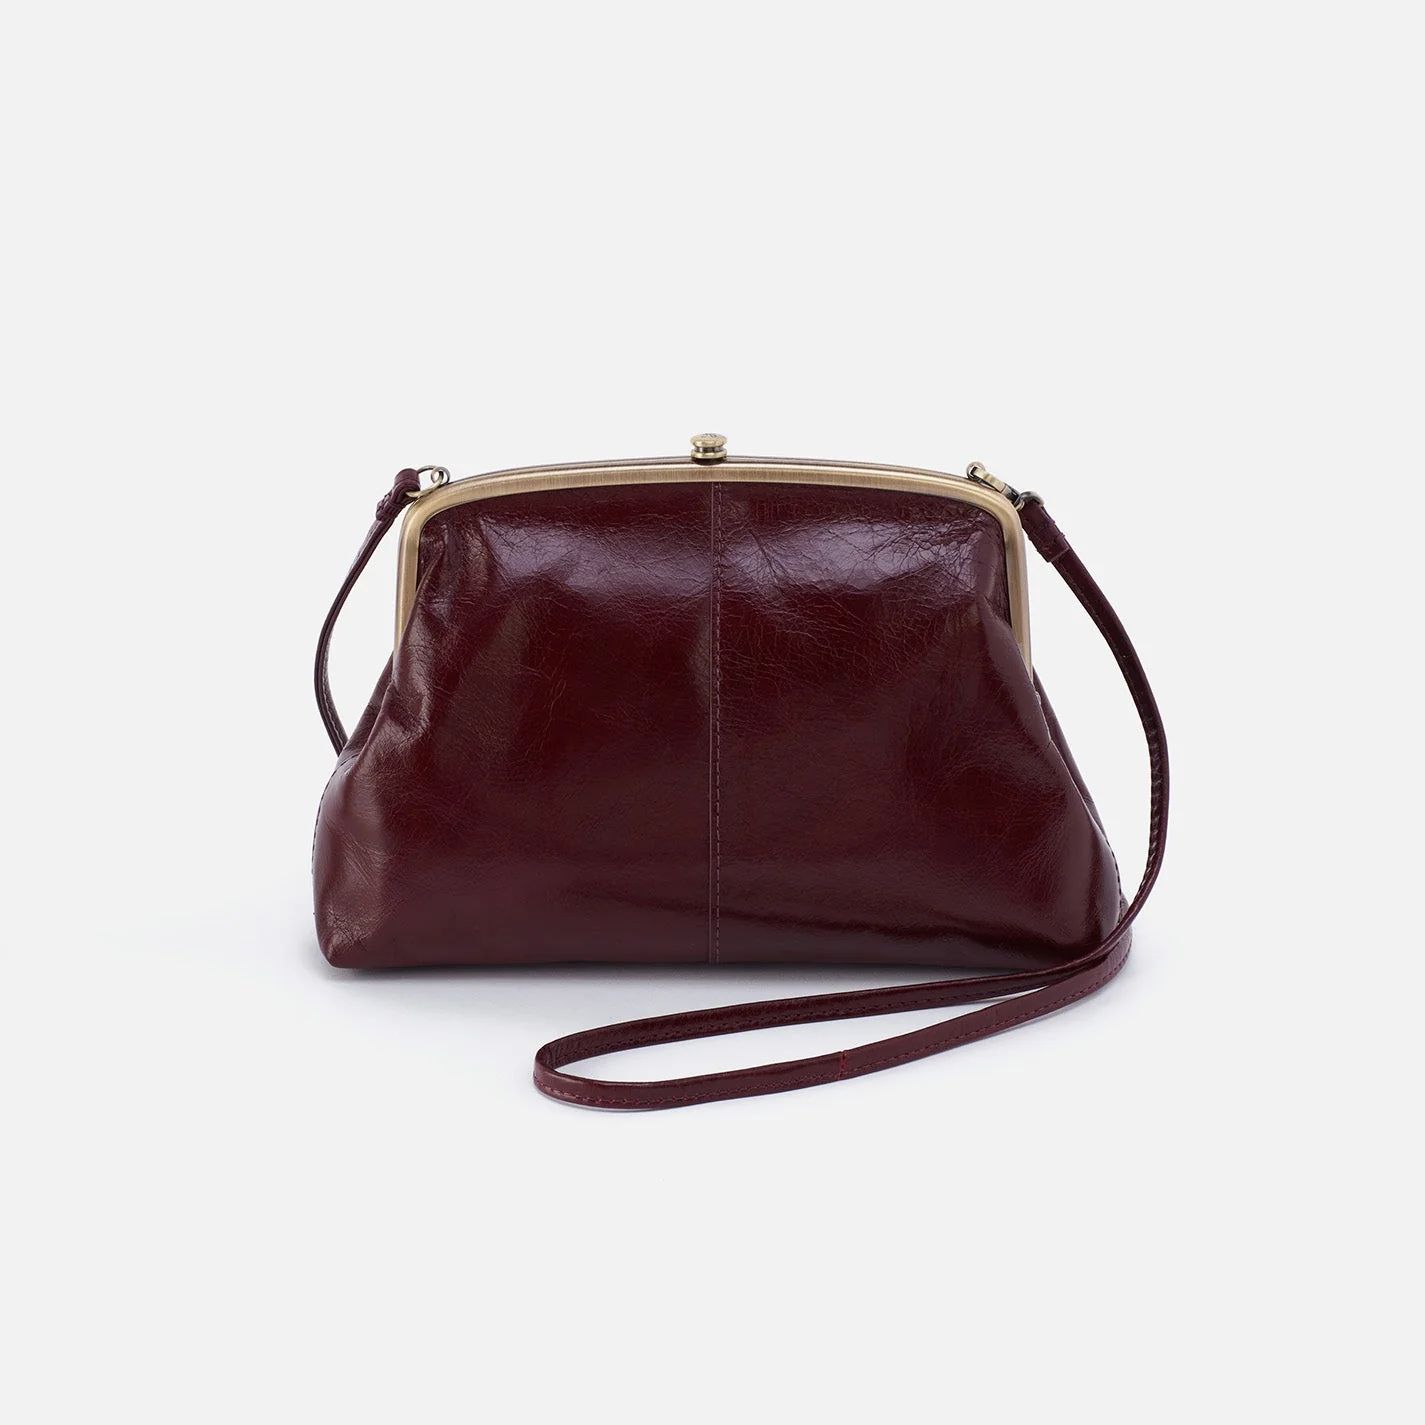 Lana Crossbody in Polished Leather - Merlot | HOBO Bags